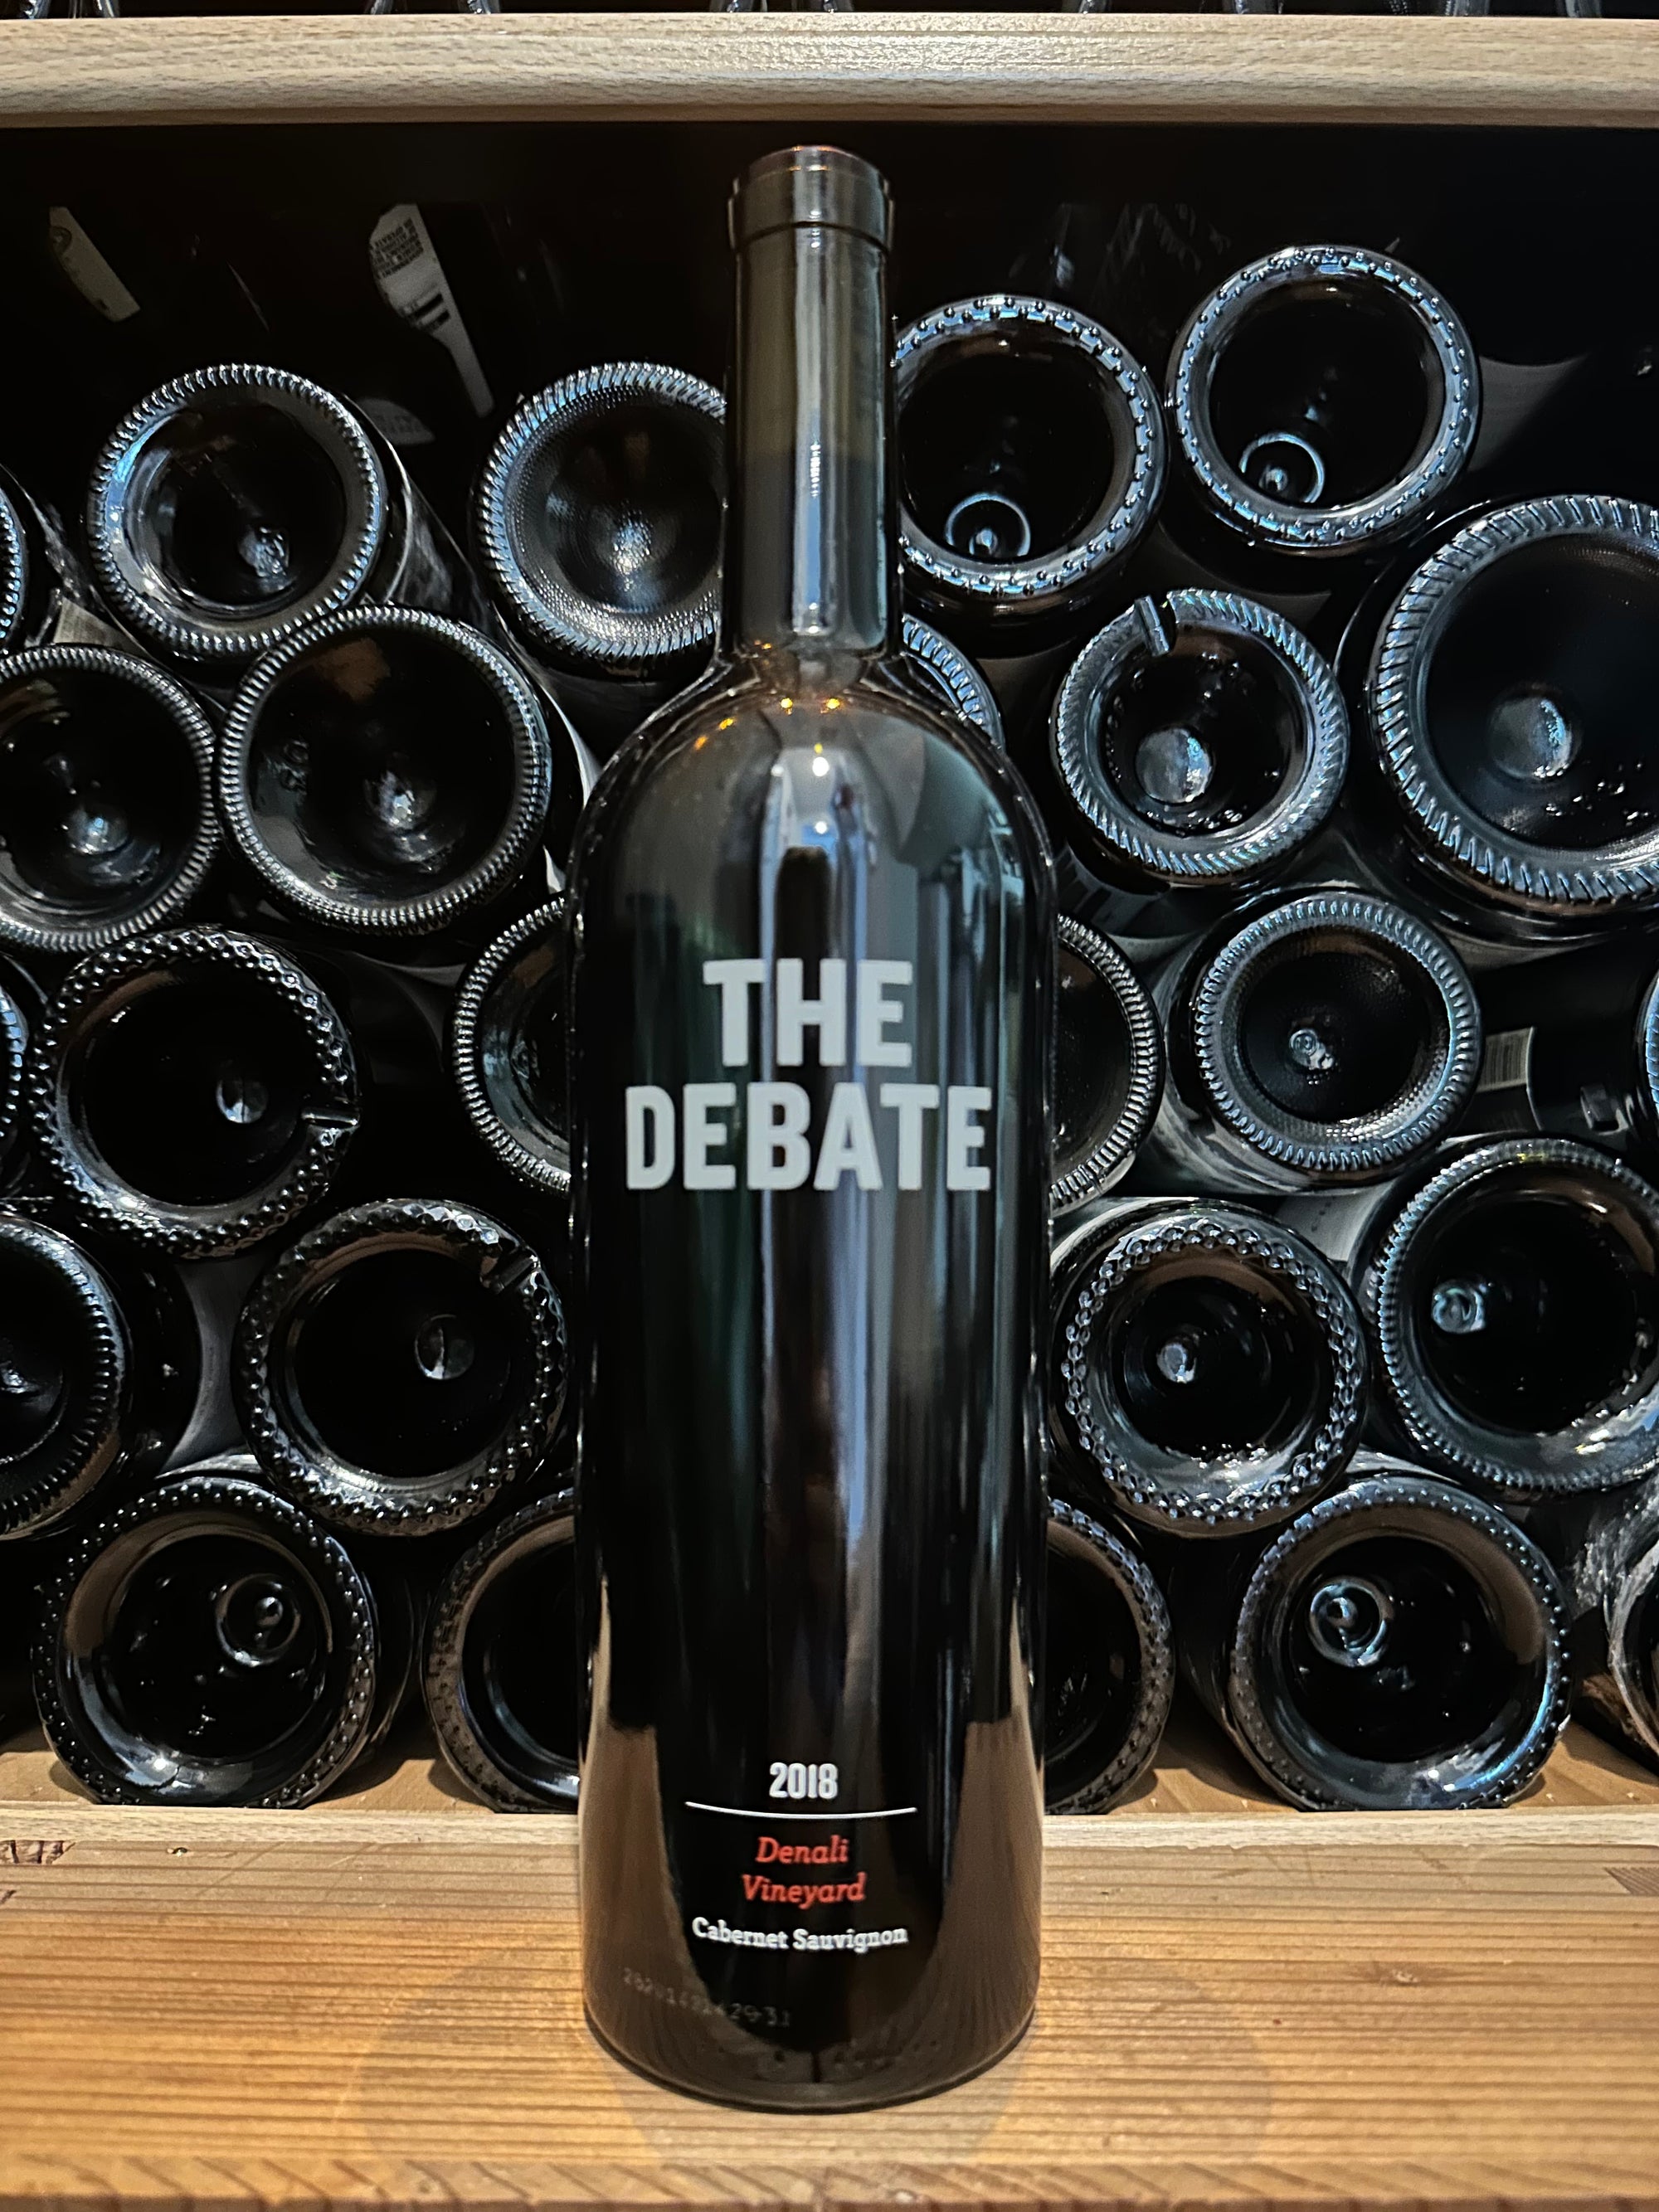 The Debate Denali Vineyard Cabernet Sauvignon 2018